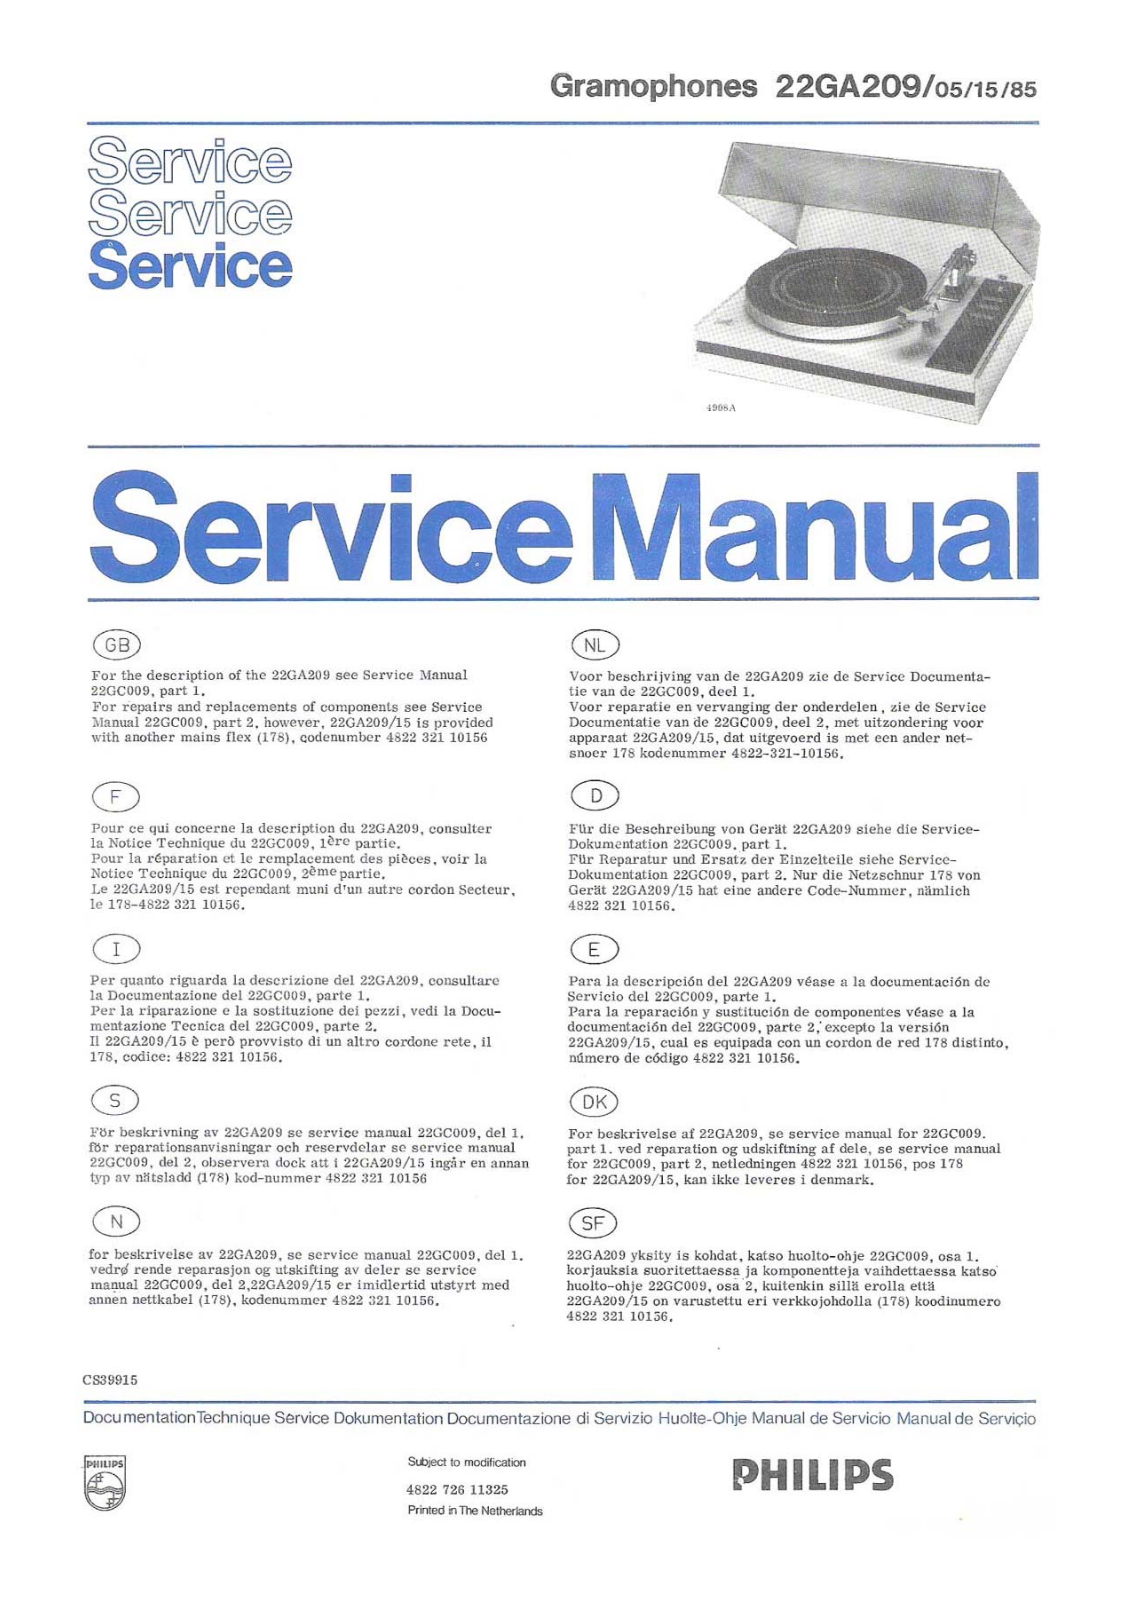 Philips 22-GA-209 Service Manual